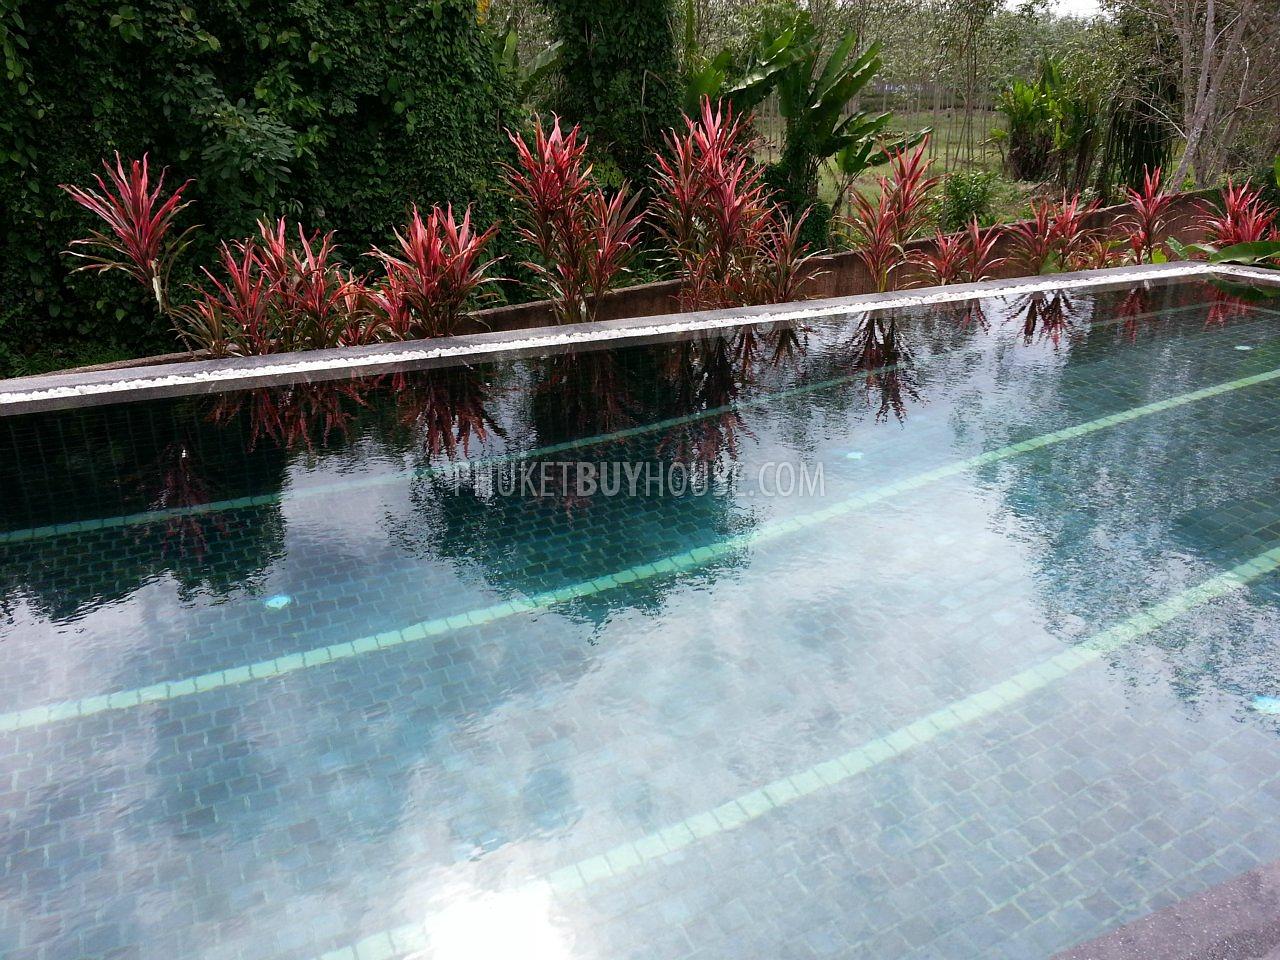 EAS3910: Hot! 4-bedroom modern pool villa on a 1 rai land plot near PIADS (UWC). Urgent sale!. Photo #31